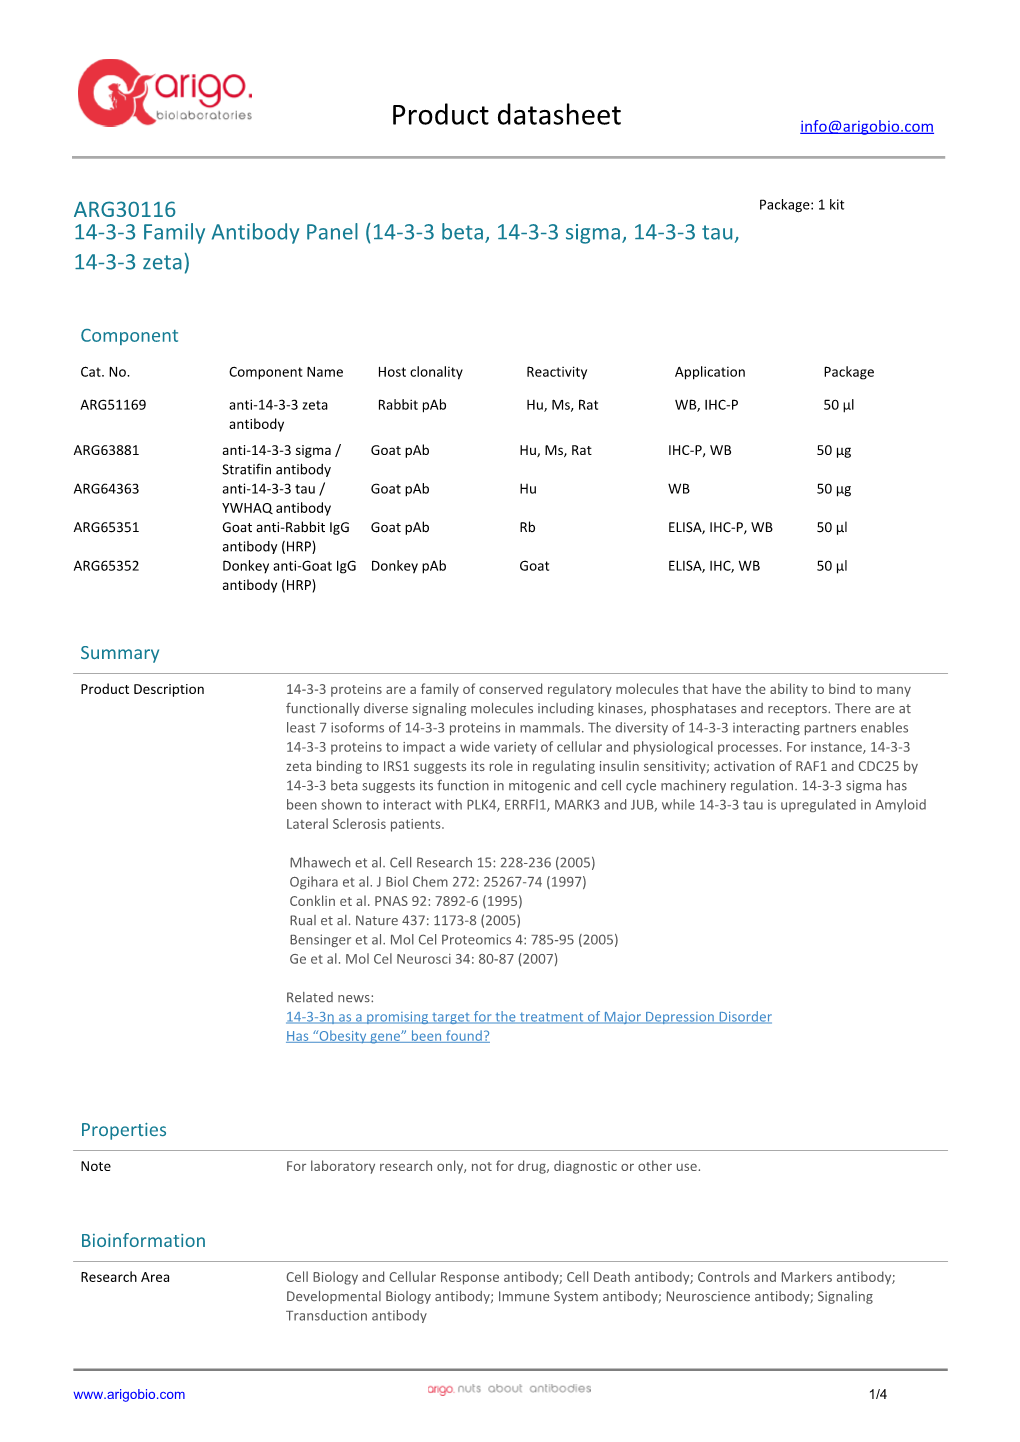 ARG30116 Package: 1 Kit 14-3-3 Family Antibody Panel (14-3-3 Beta, 14-3-3 Sigma, 14-3-3 Tau, 14-3-3 Zeta)